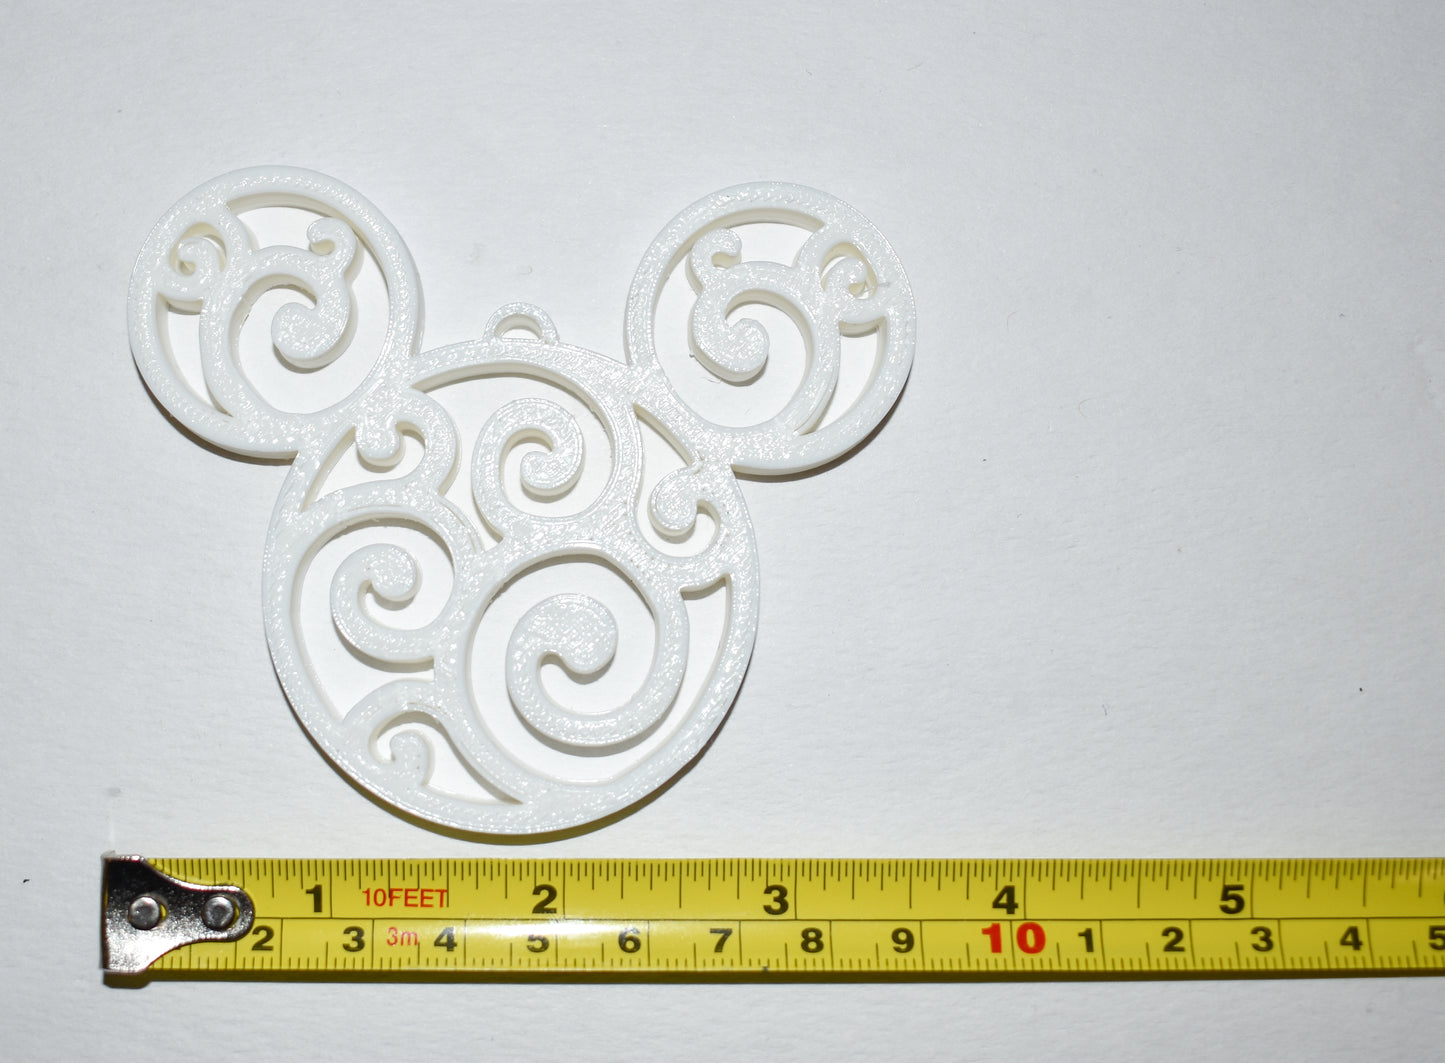 Mickey Head Swirl Design Christmas Ornaments Set Of 3 White Made In USA PR1656